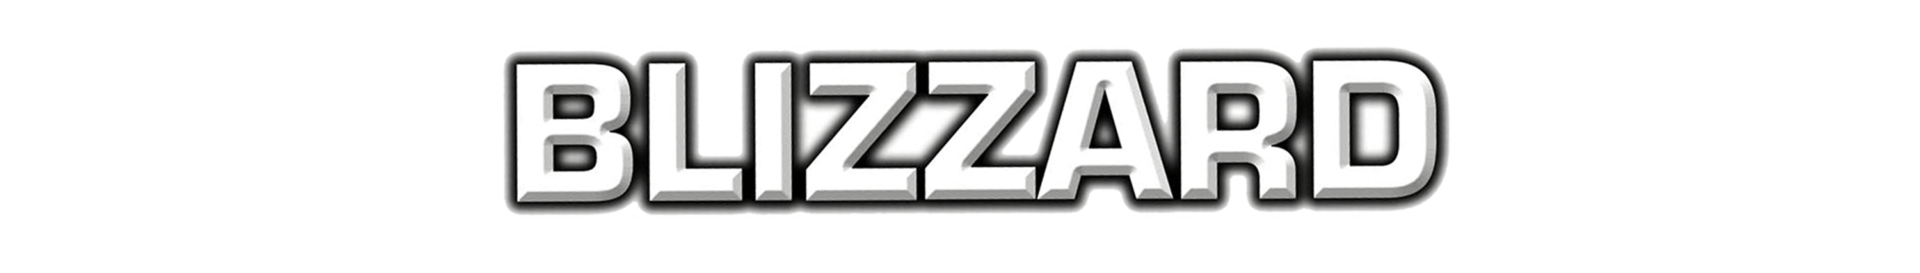 blizzard_logo02